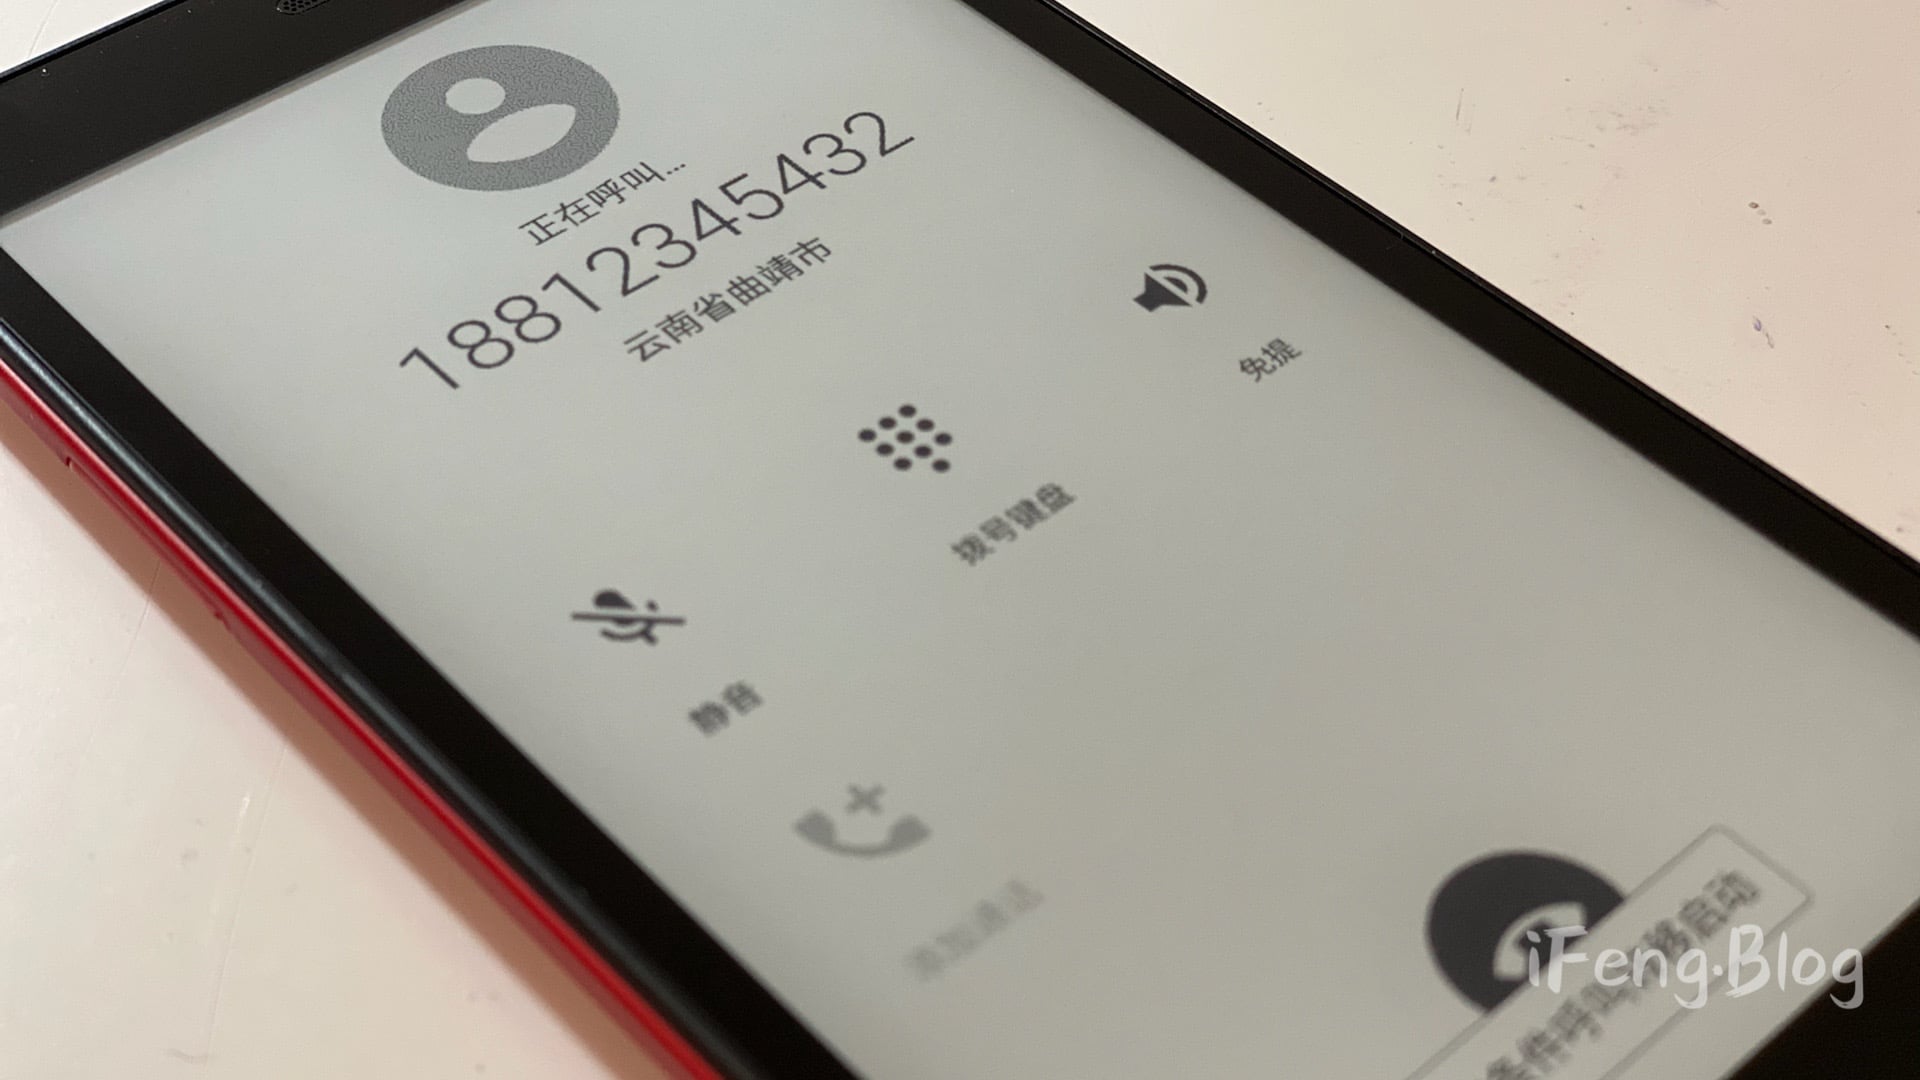 Tencent Pocket Read - make call